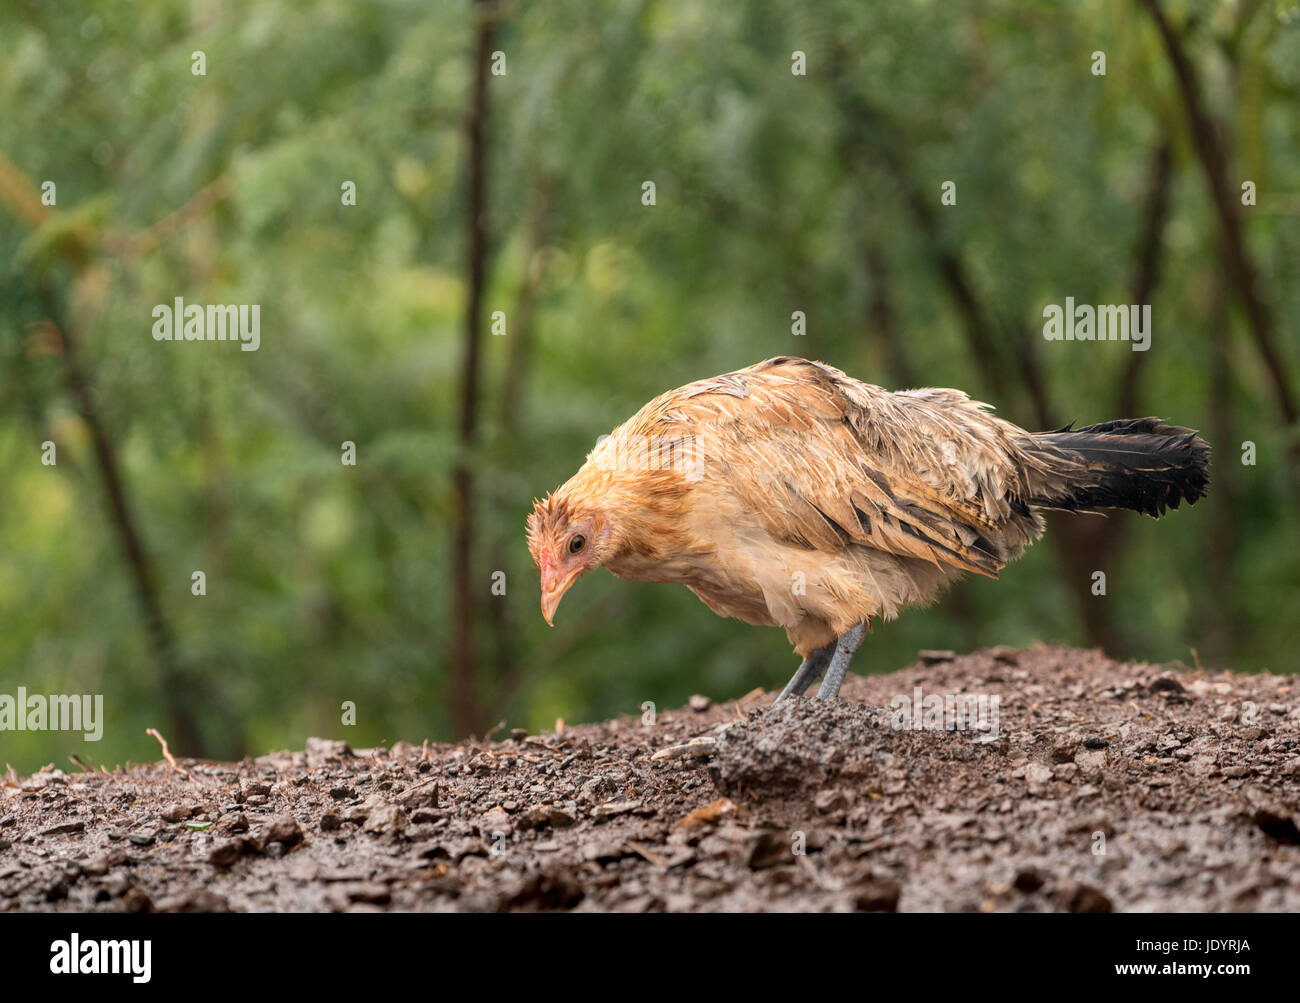 Wild poultry on Kauai soaking wet after rain storm Stock Photo